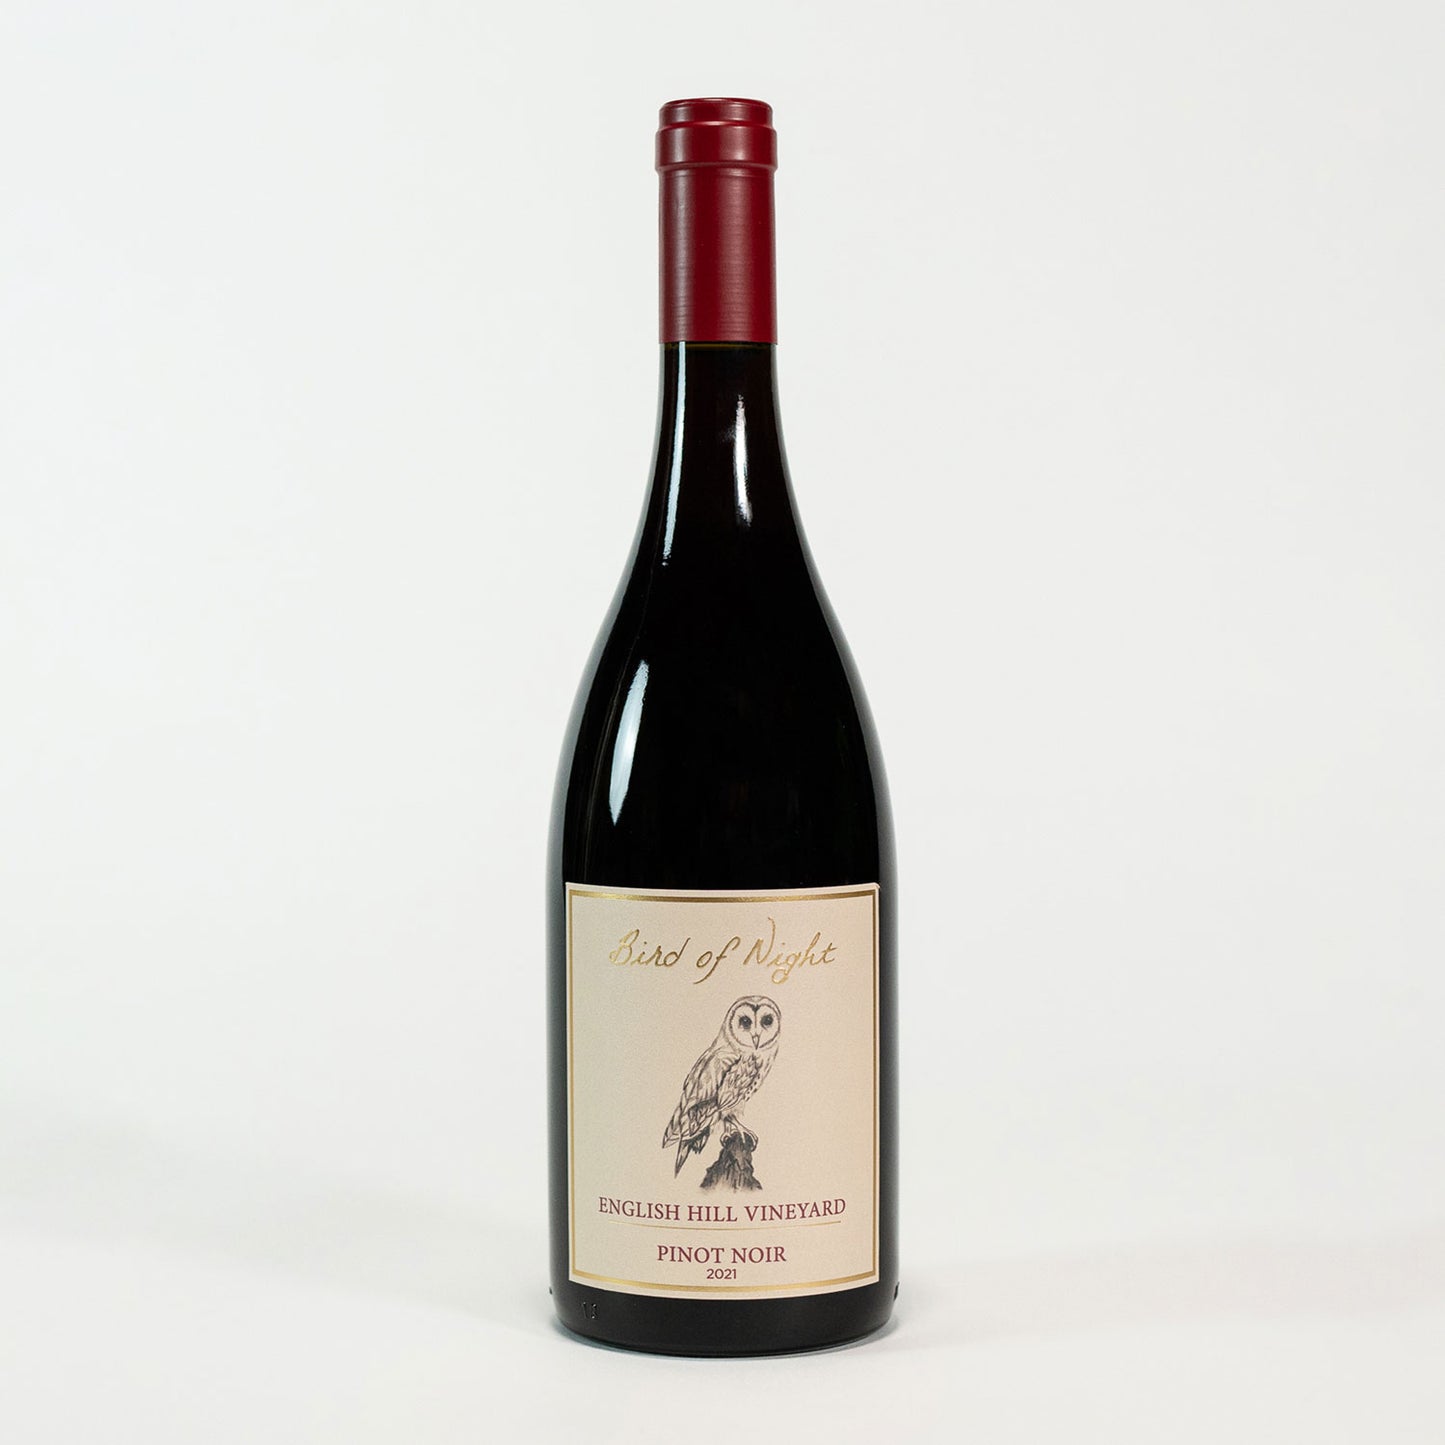 Bottle shot of 2021 English Hill Vineyard Pinot Noir on white background